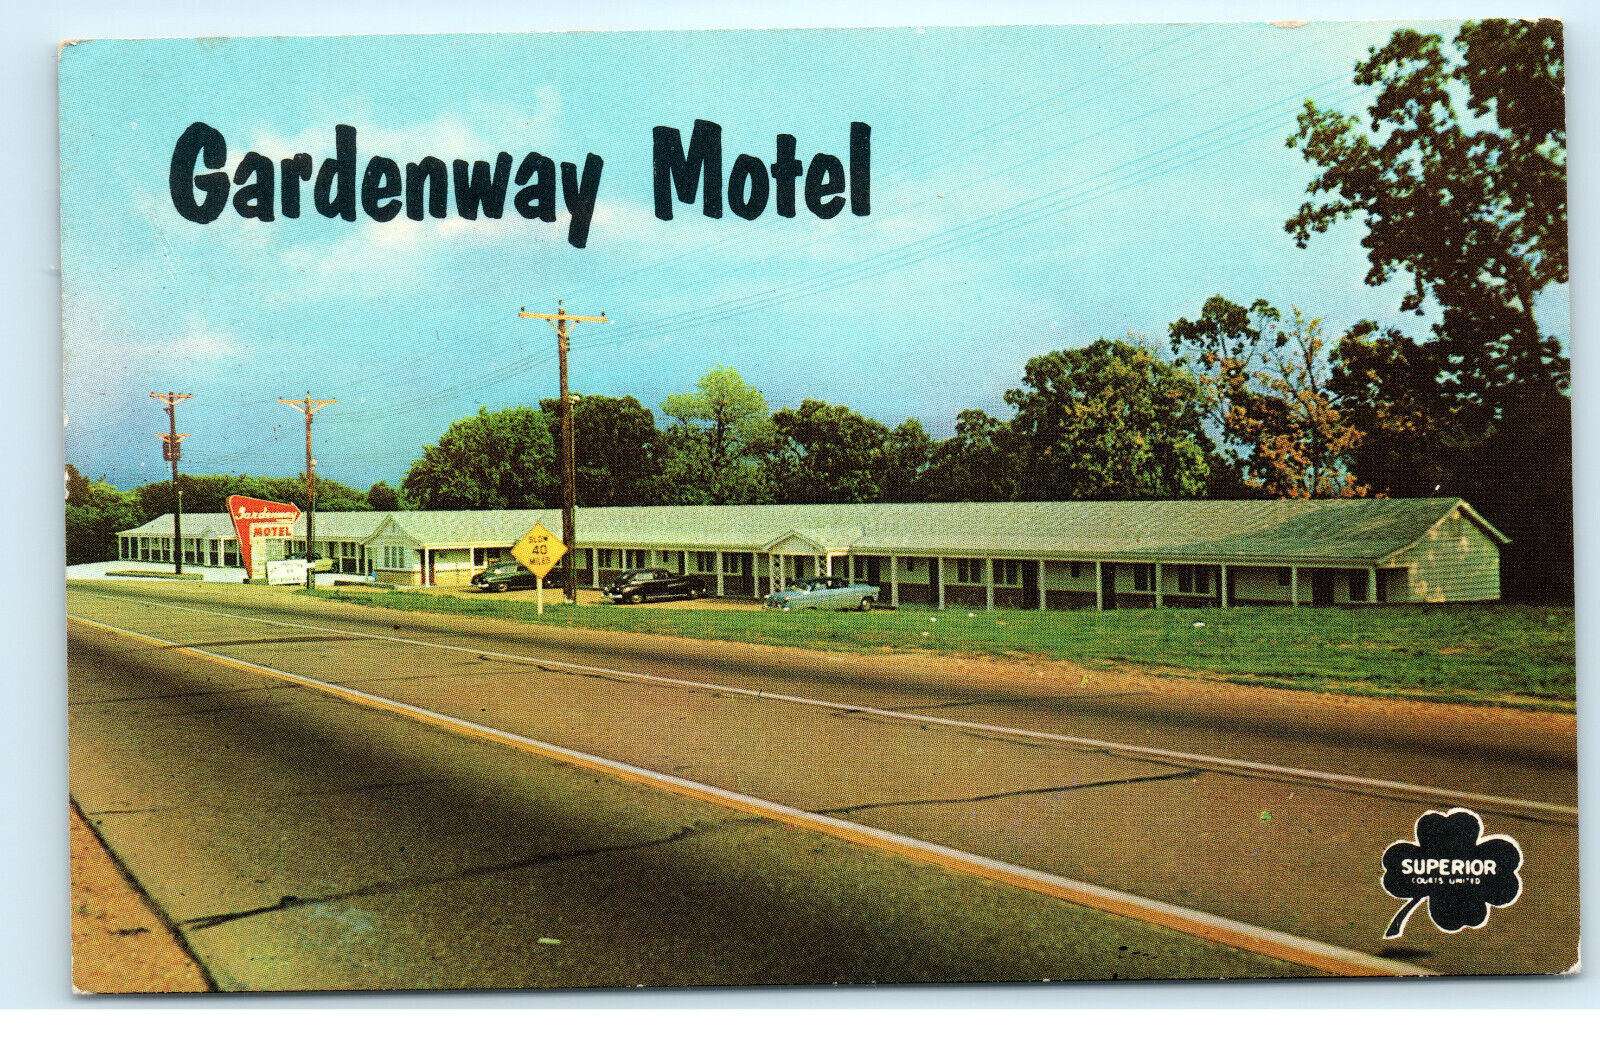 Gardenway Motel Villa Ridge Missouri 1960s Route 66 Vintage Postcard E73